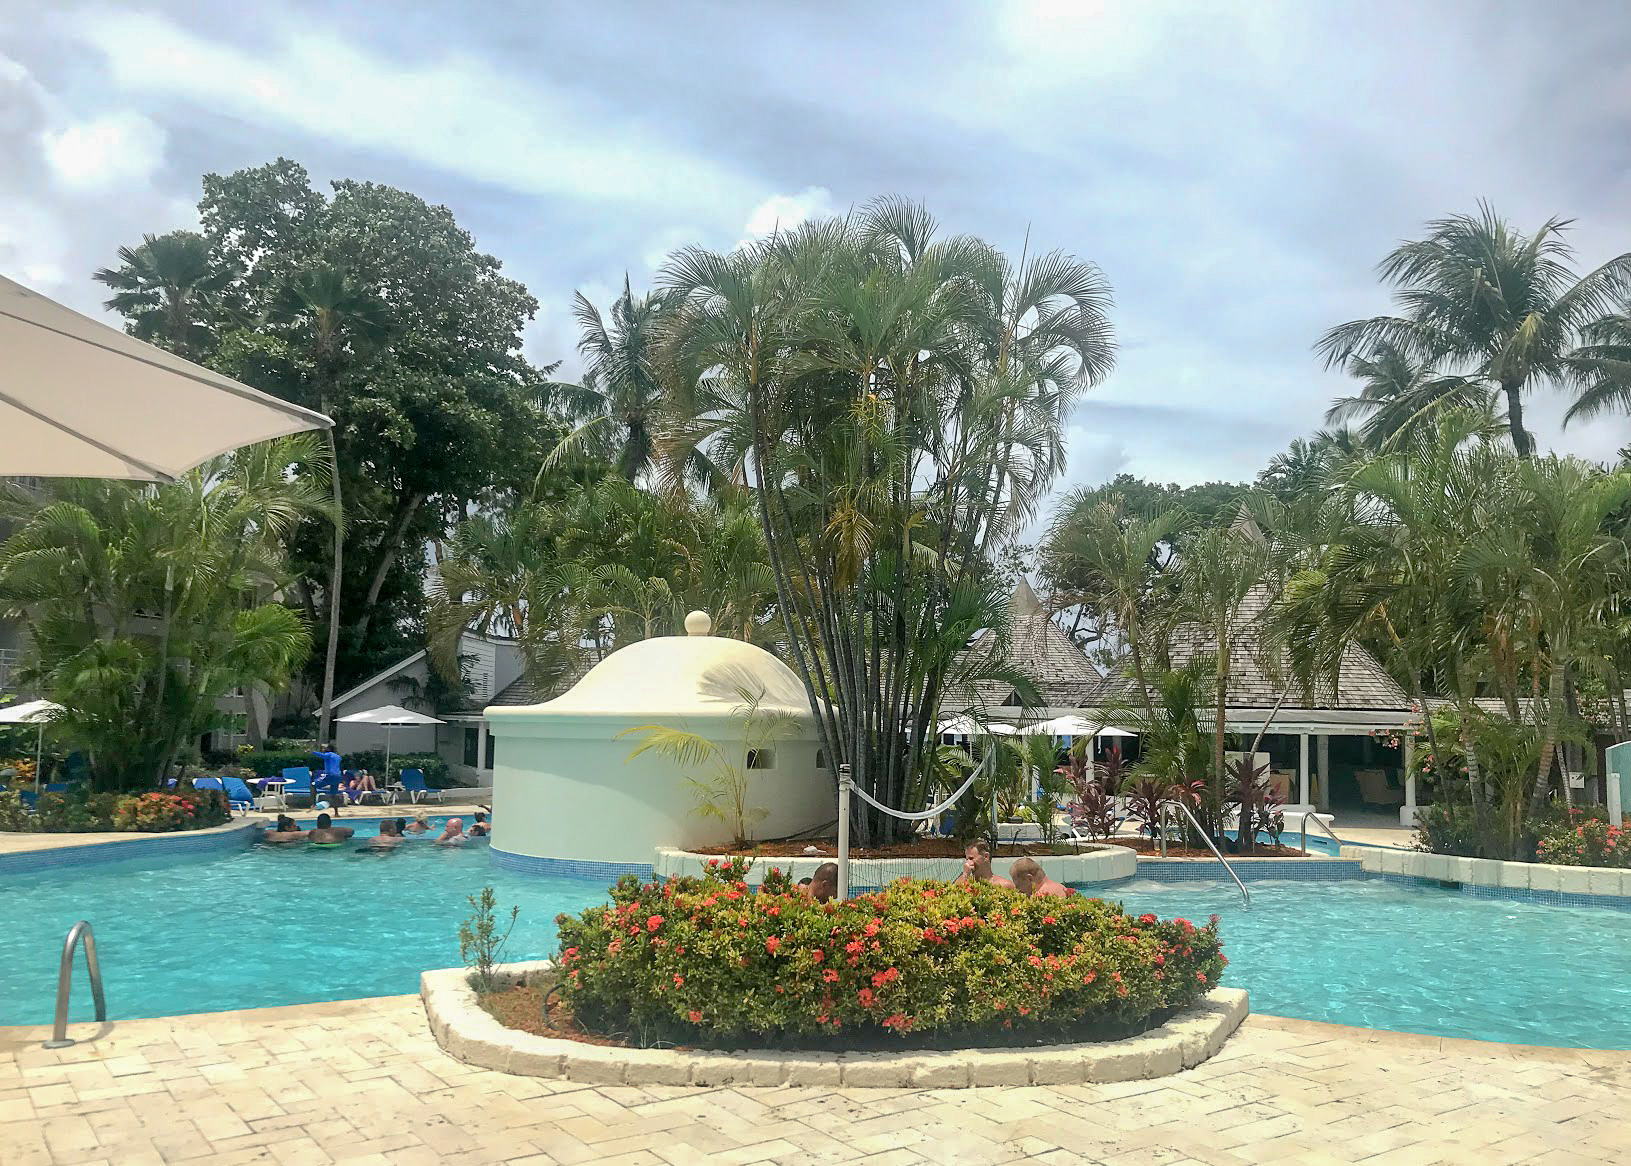 A Bed in Barbados - The Club Barbados Review